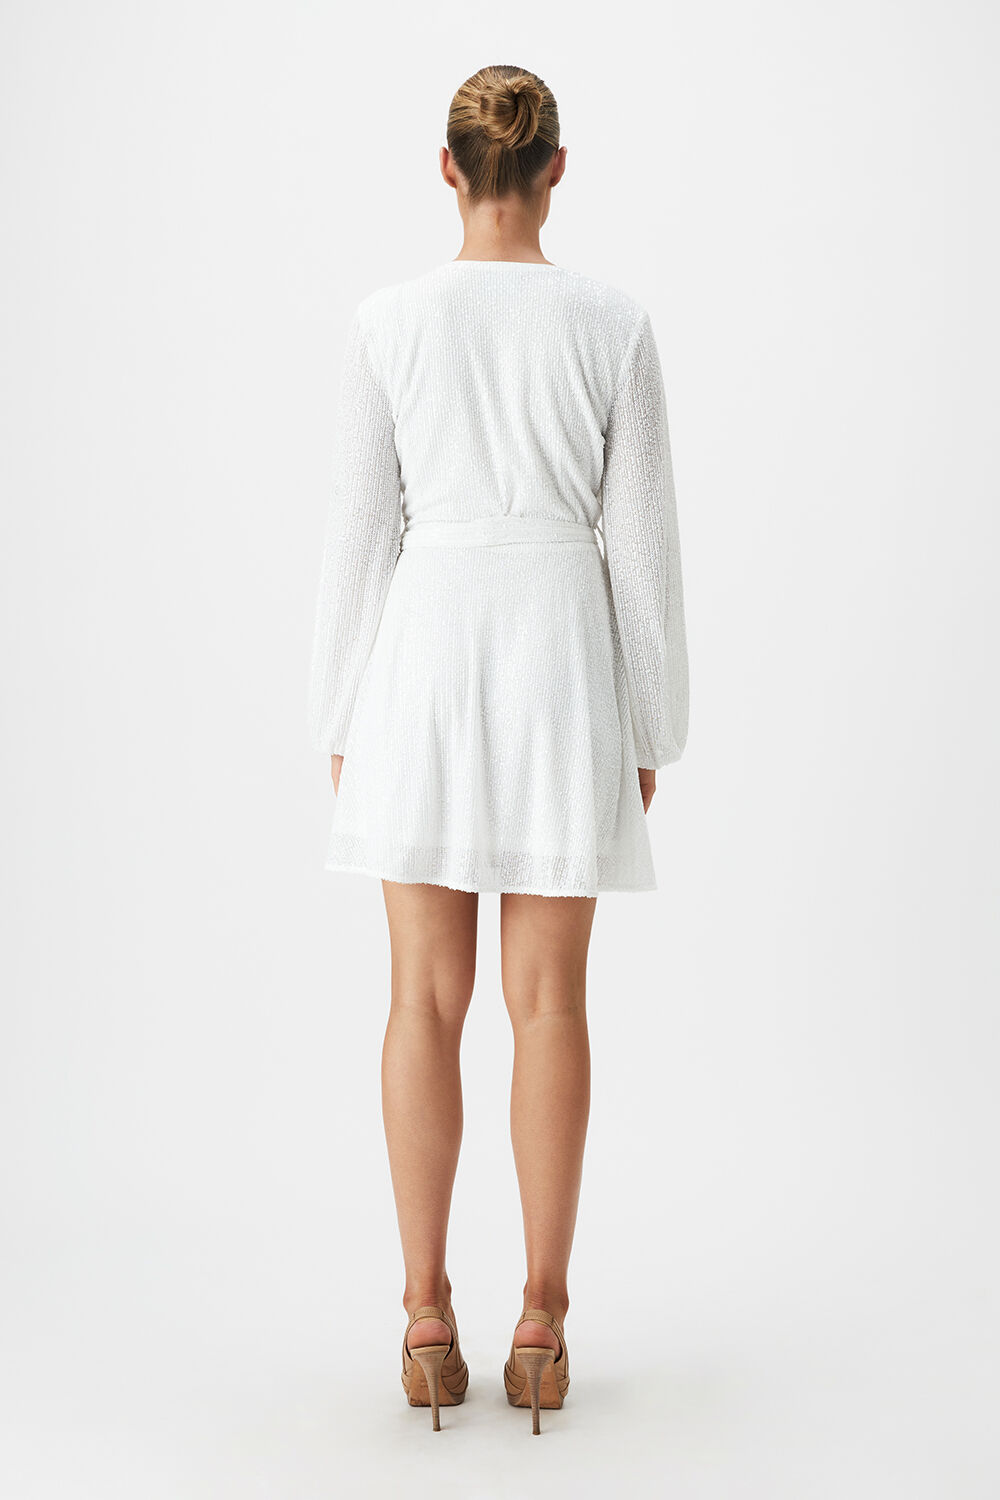 SEQUIN BELLISSA DRESS in colour BRIGHT WHITE